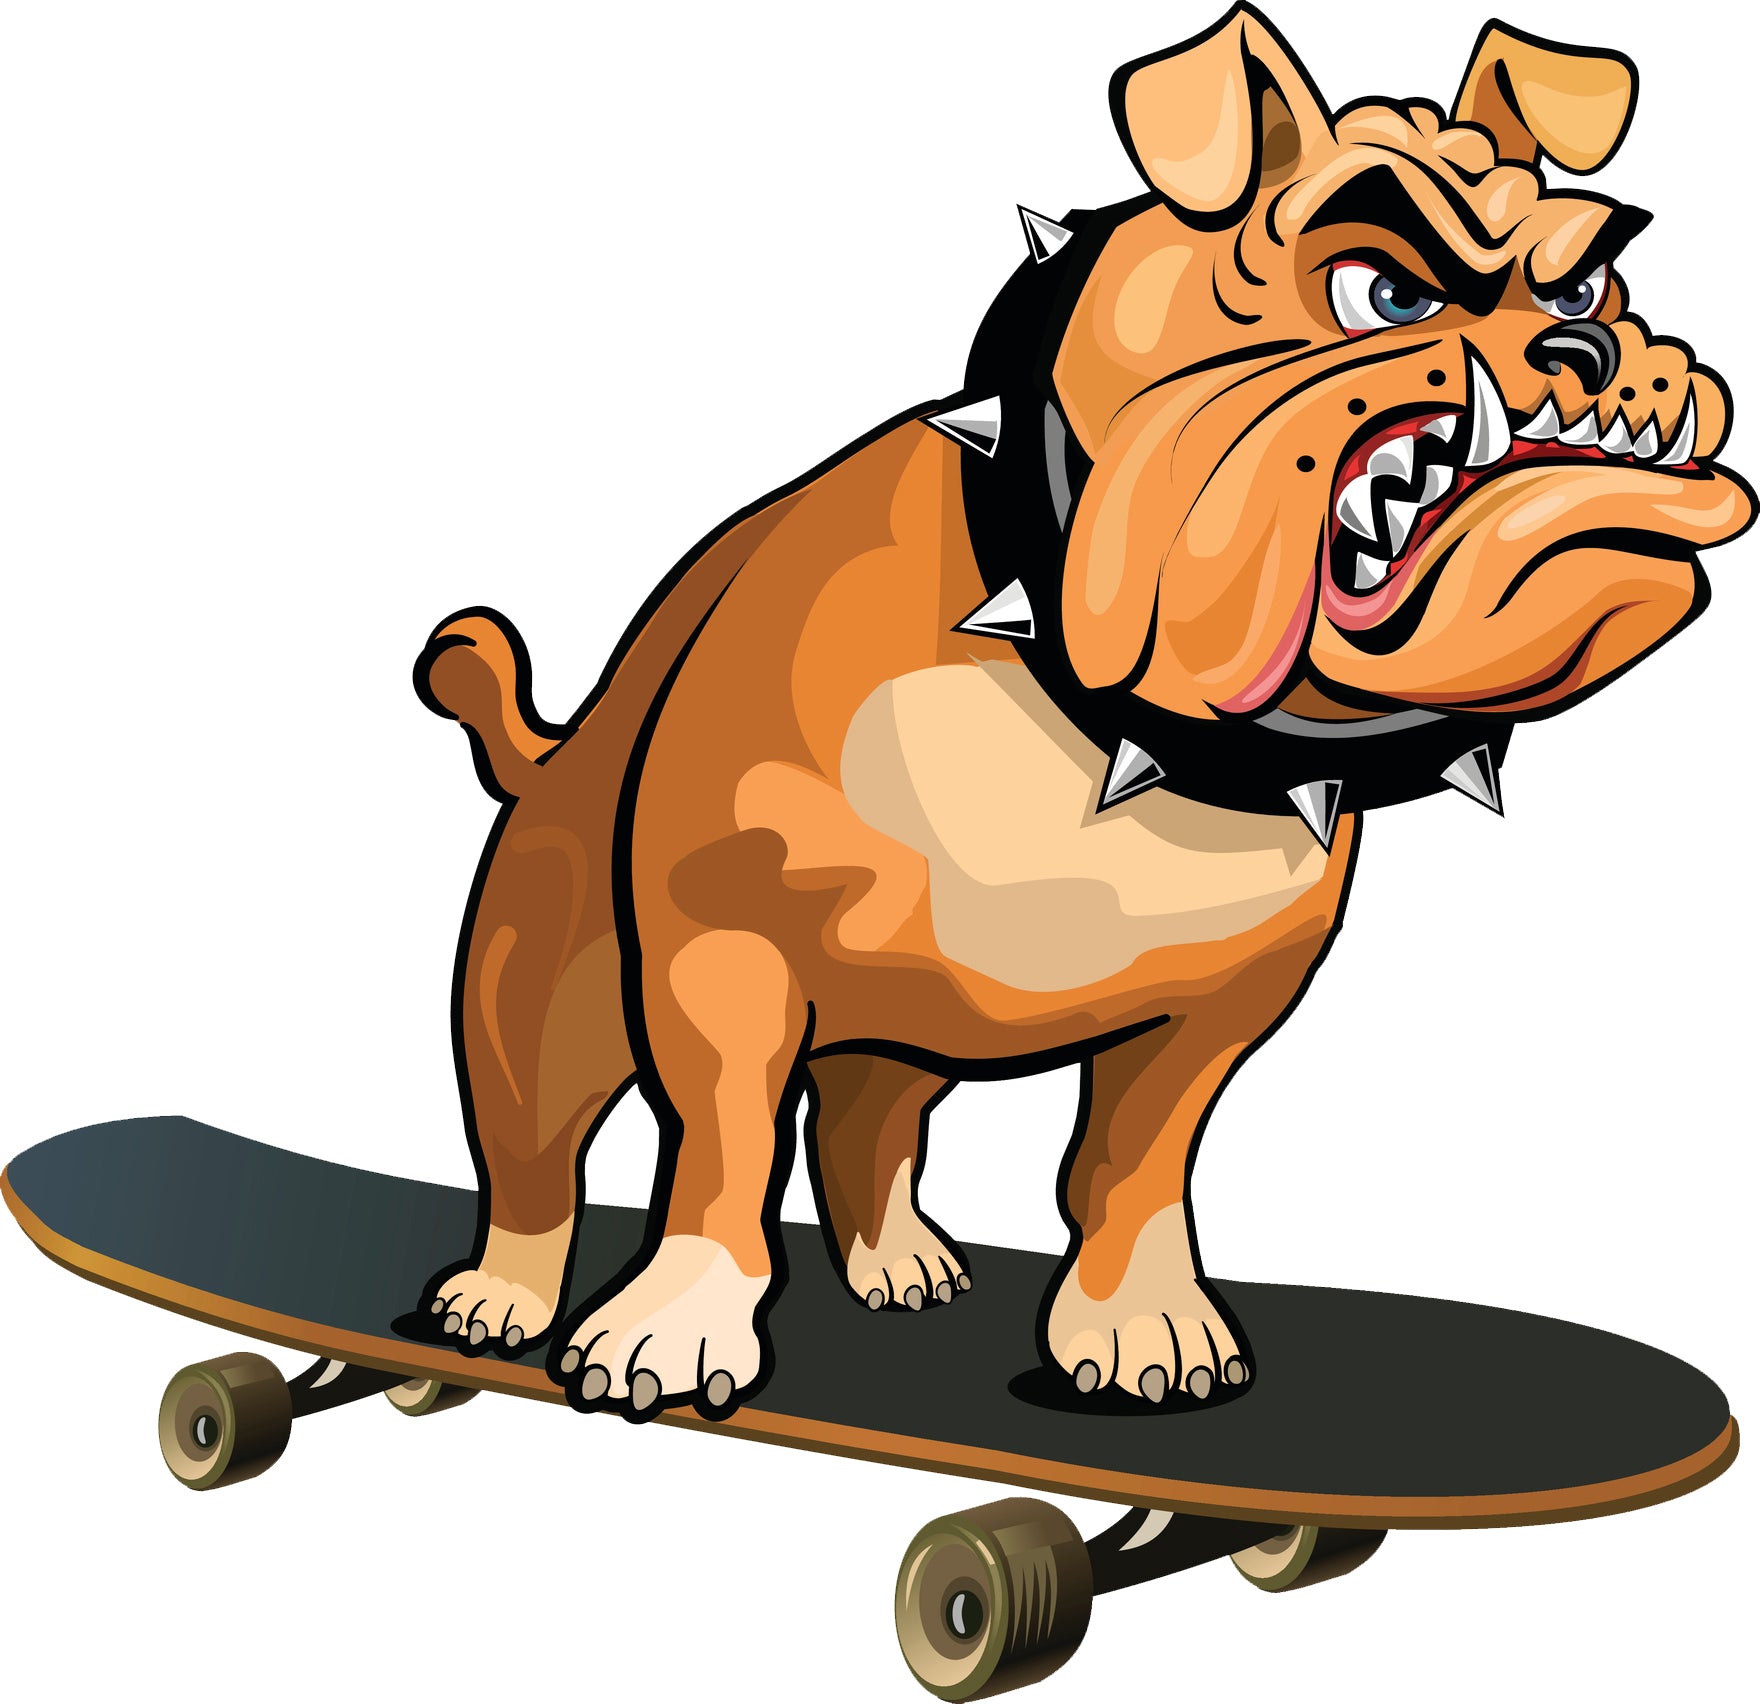 Cool Tough Brown Bulldog with Spike Collar on Skateboard Cartoon Vinyl Decal Sticker